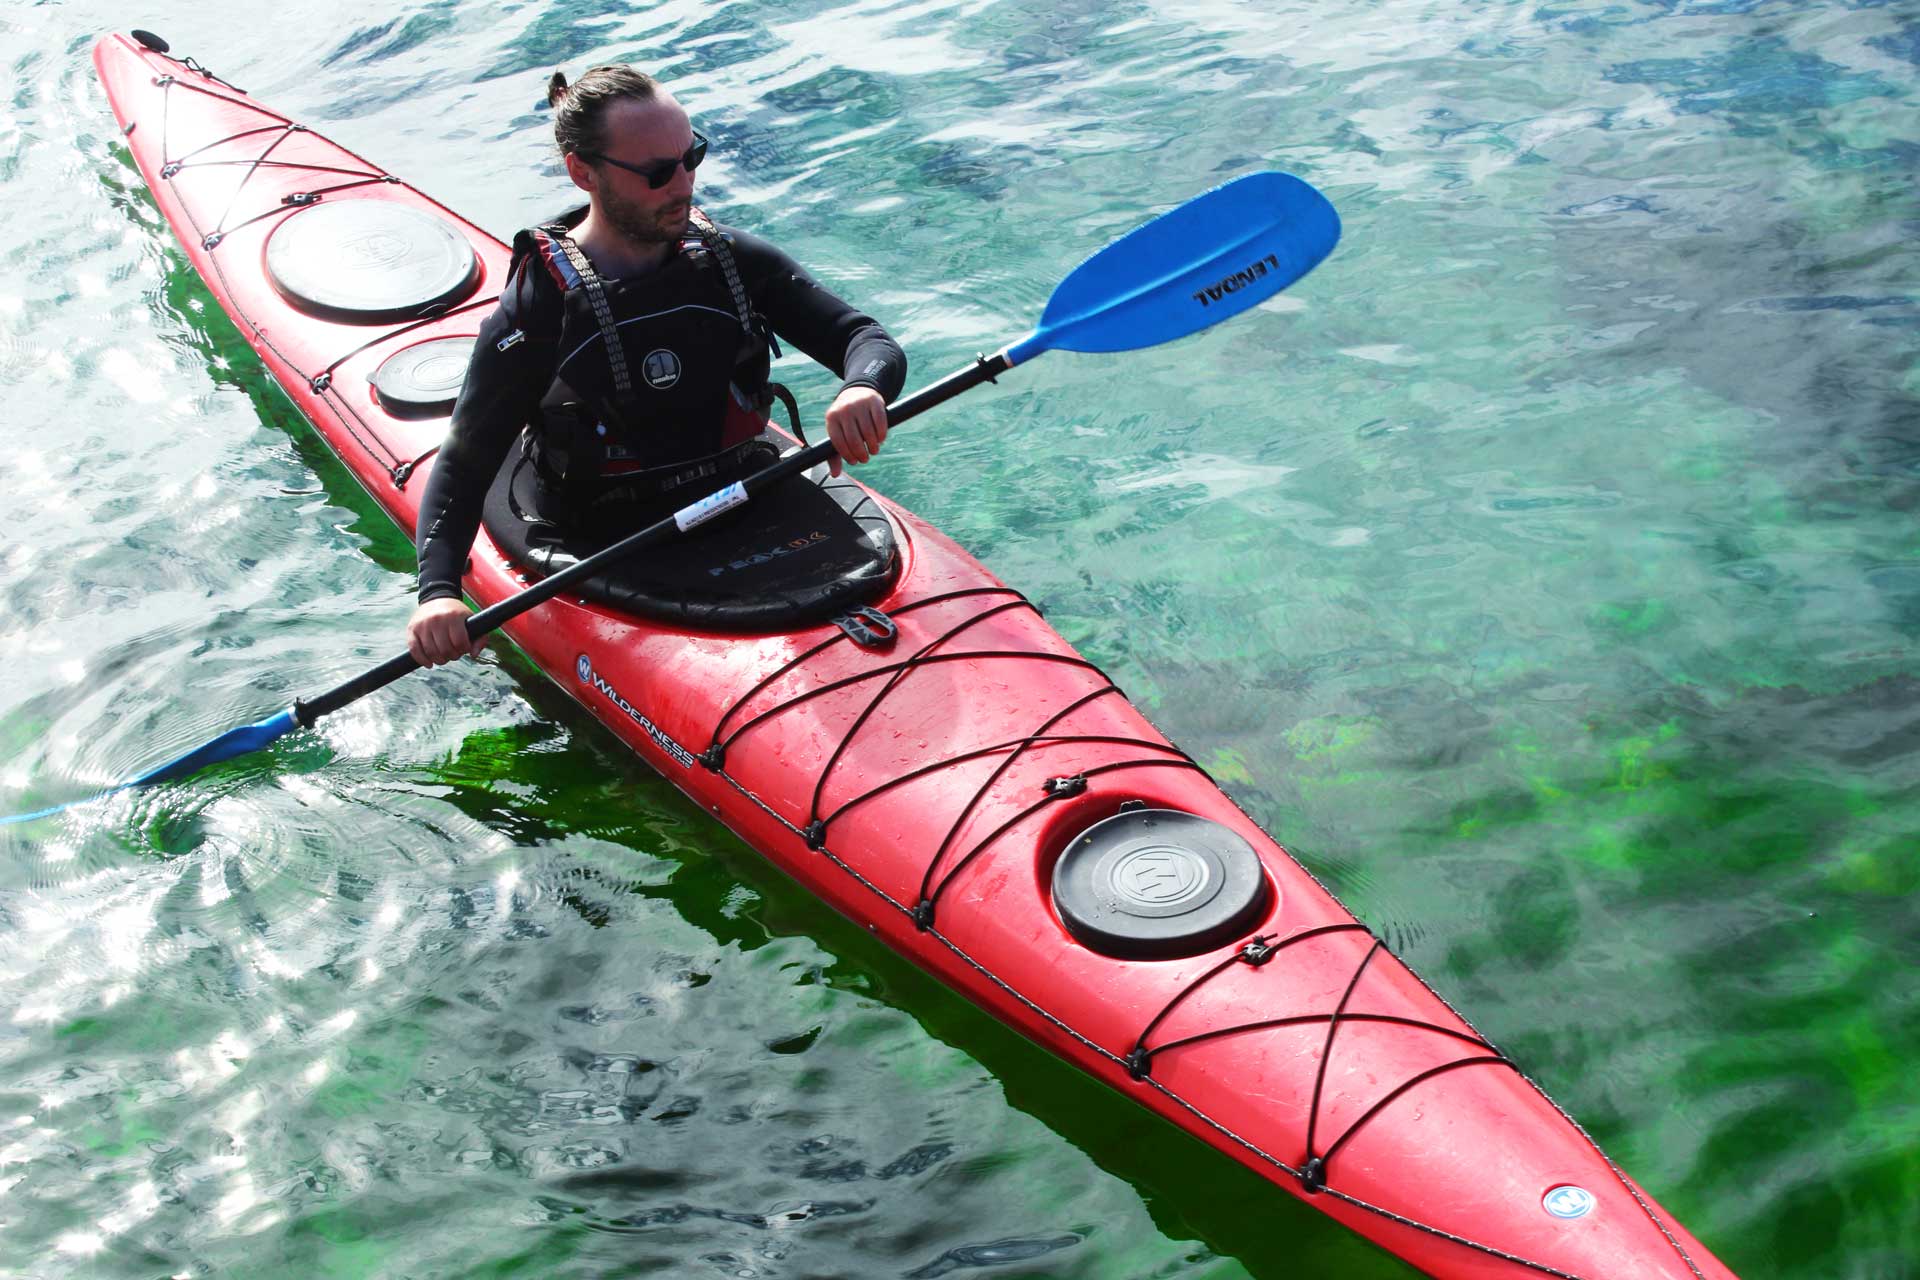 Giants Causeway Sea Kayaking - Far and Wild